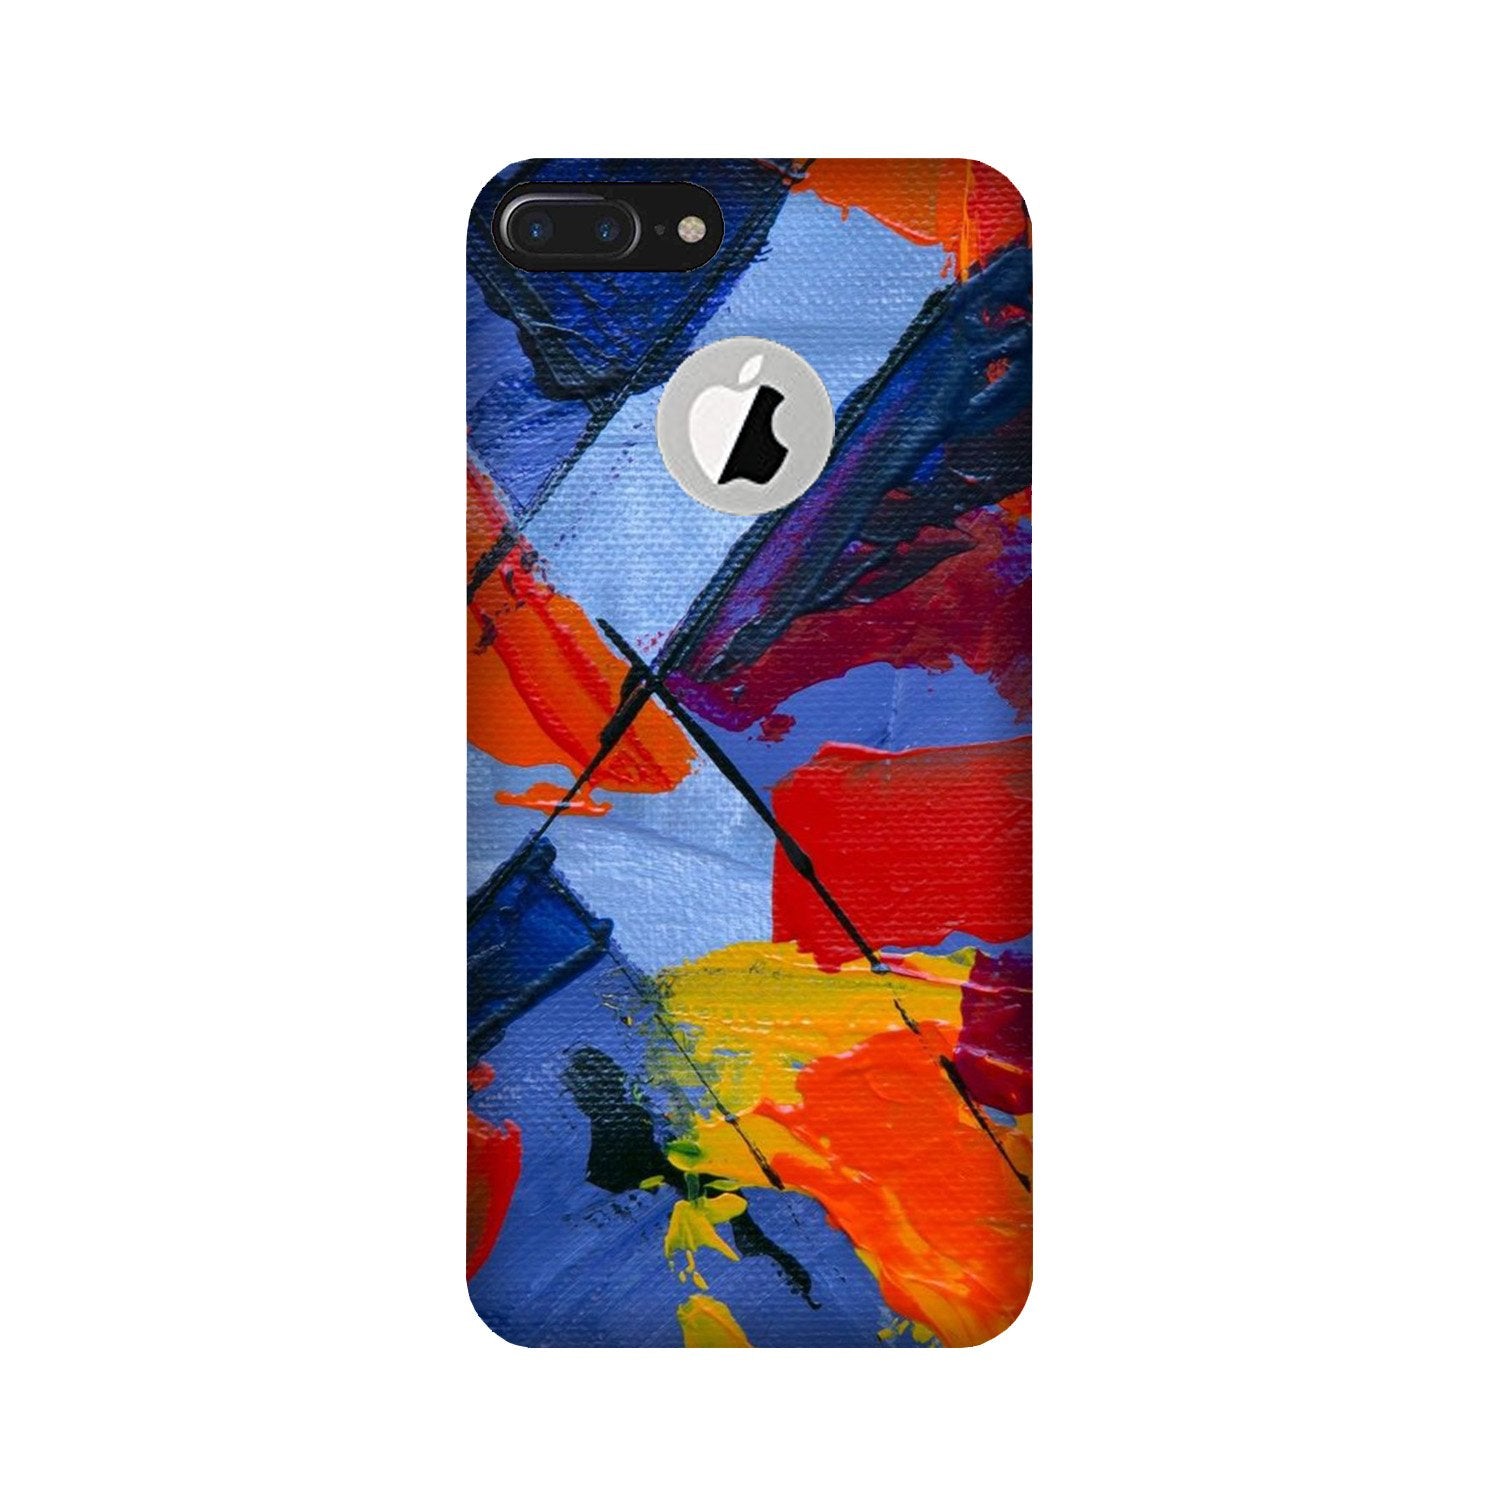 Modern Art Case for iPhone 7 Plus logo cut (Design No. 240)